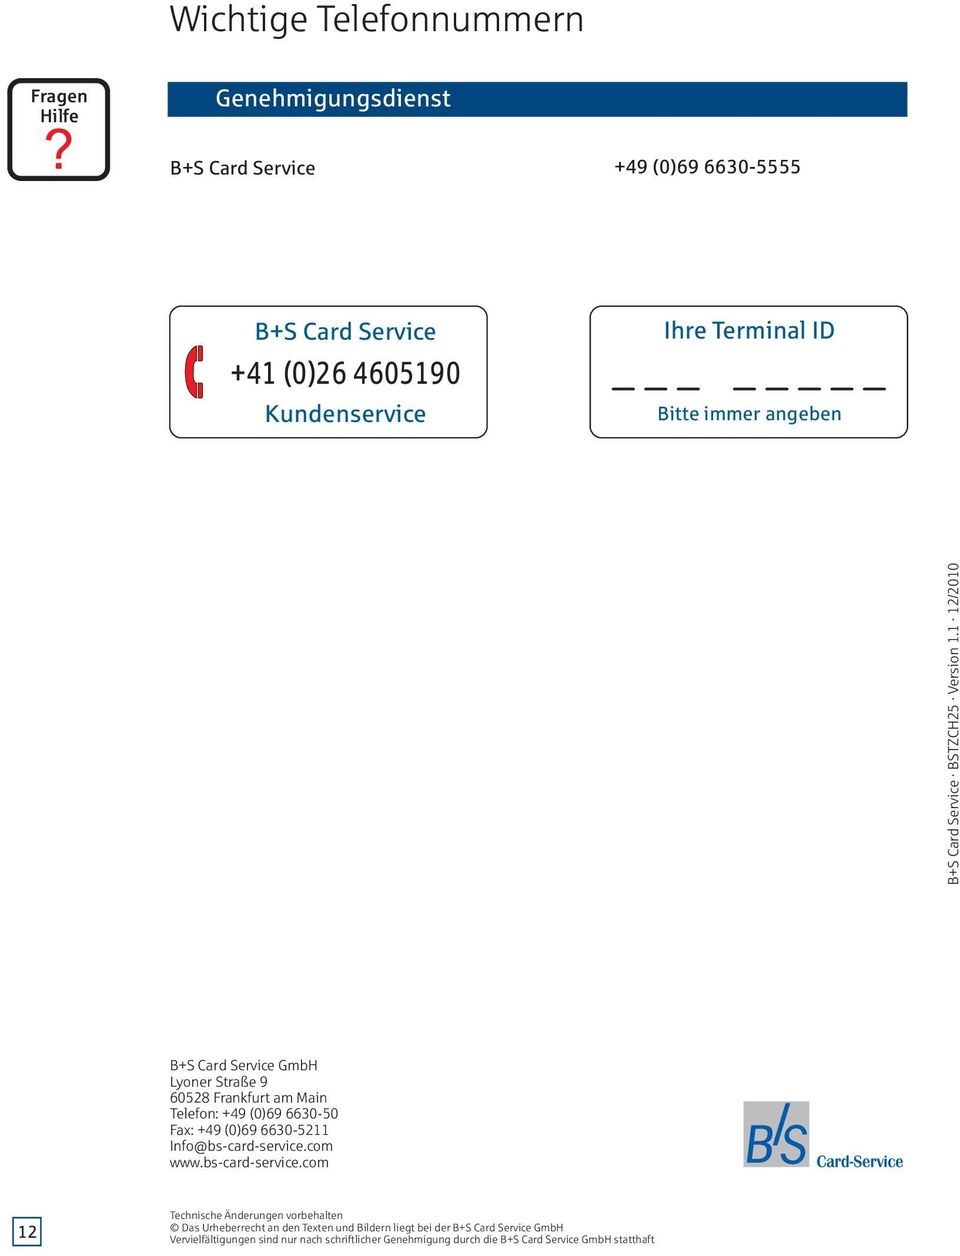 1 12 /2010 B+S Card Service GmbH Lyoner Straße 9 60528 Frankfurt am Main Telefon: +49 (0)69 6630-50 Fax: +49 (0)69 6630-5211 Info@bs-card-service.